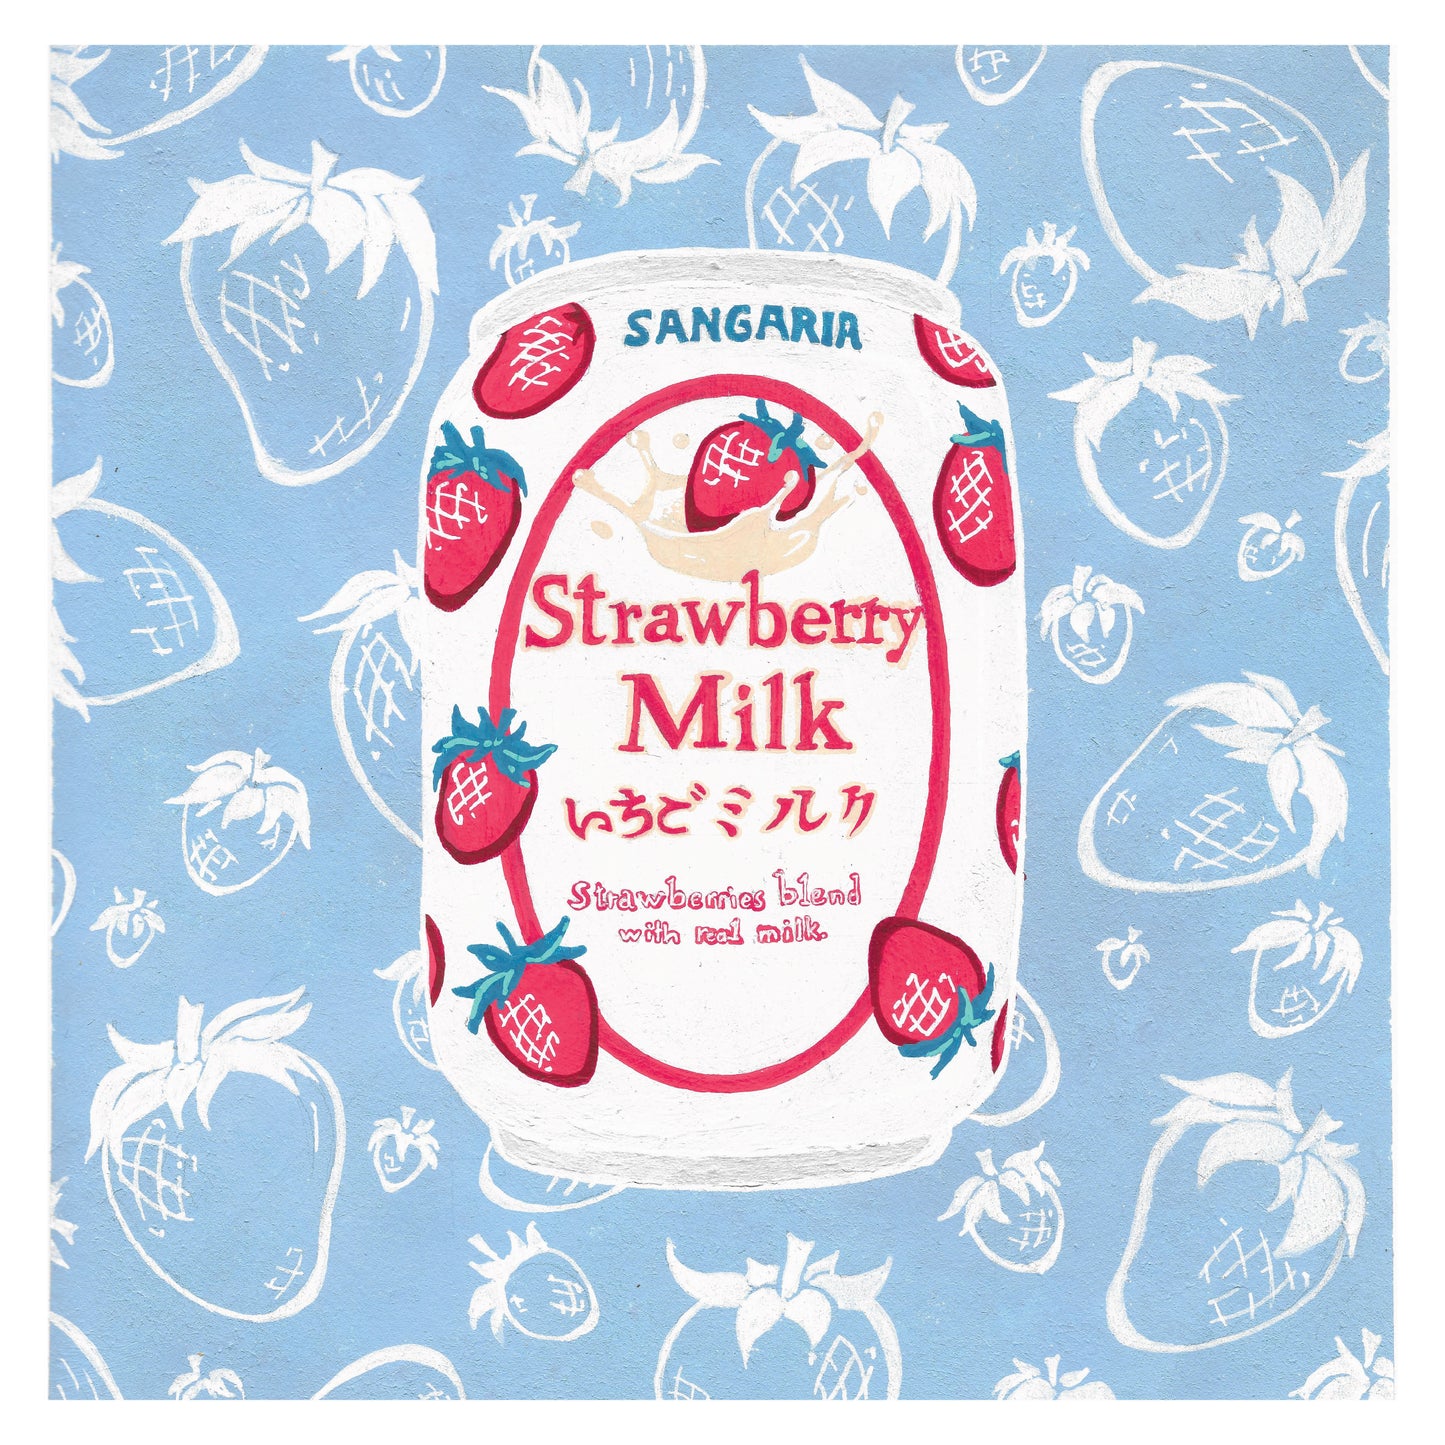 Strawberry Milk Print